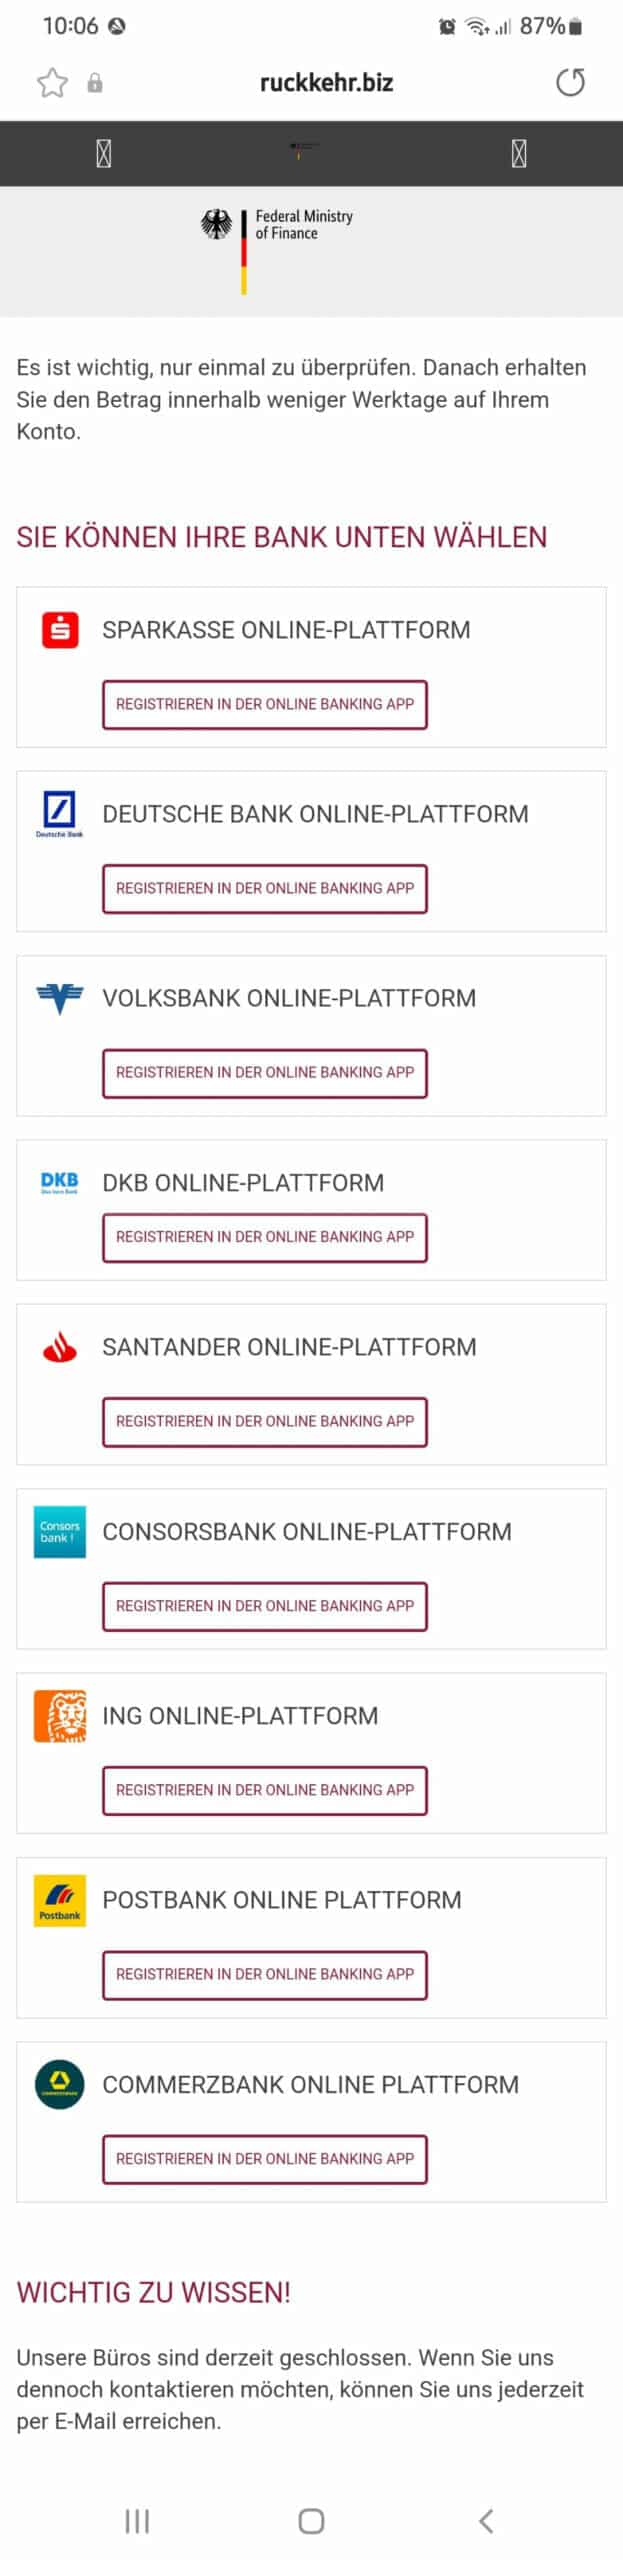 Screenshot der gefälschten Online-Plattformen folgender Banken: Sparkasse, Deutsche Bank, Volksbank, DKB, Santander, Consorsbank, ING, Postbank, Commerzbank